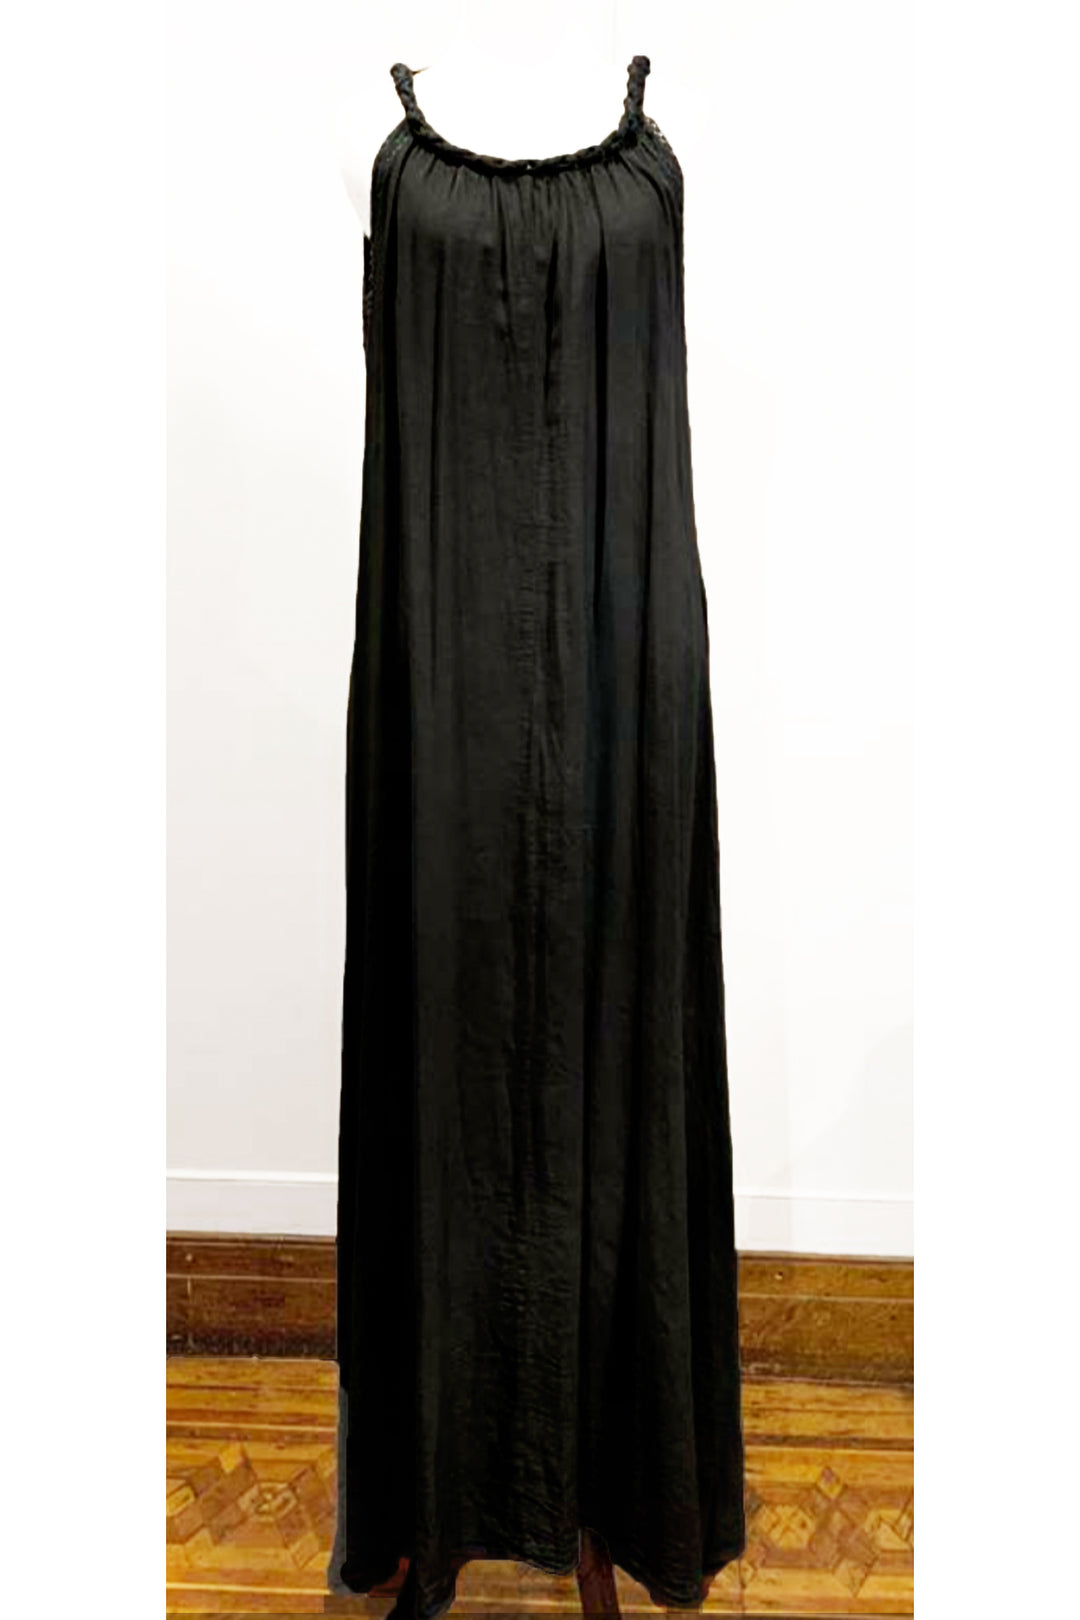 Black Goddess Maxi Dress - Kingfisher Road - Online Boutique